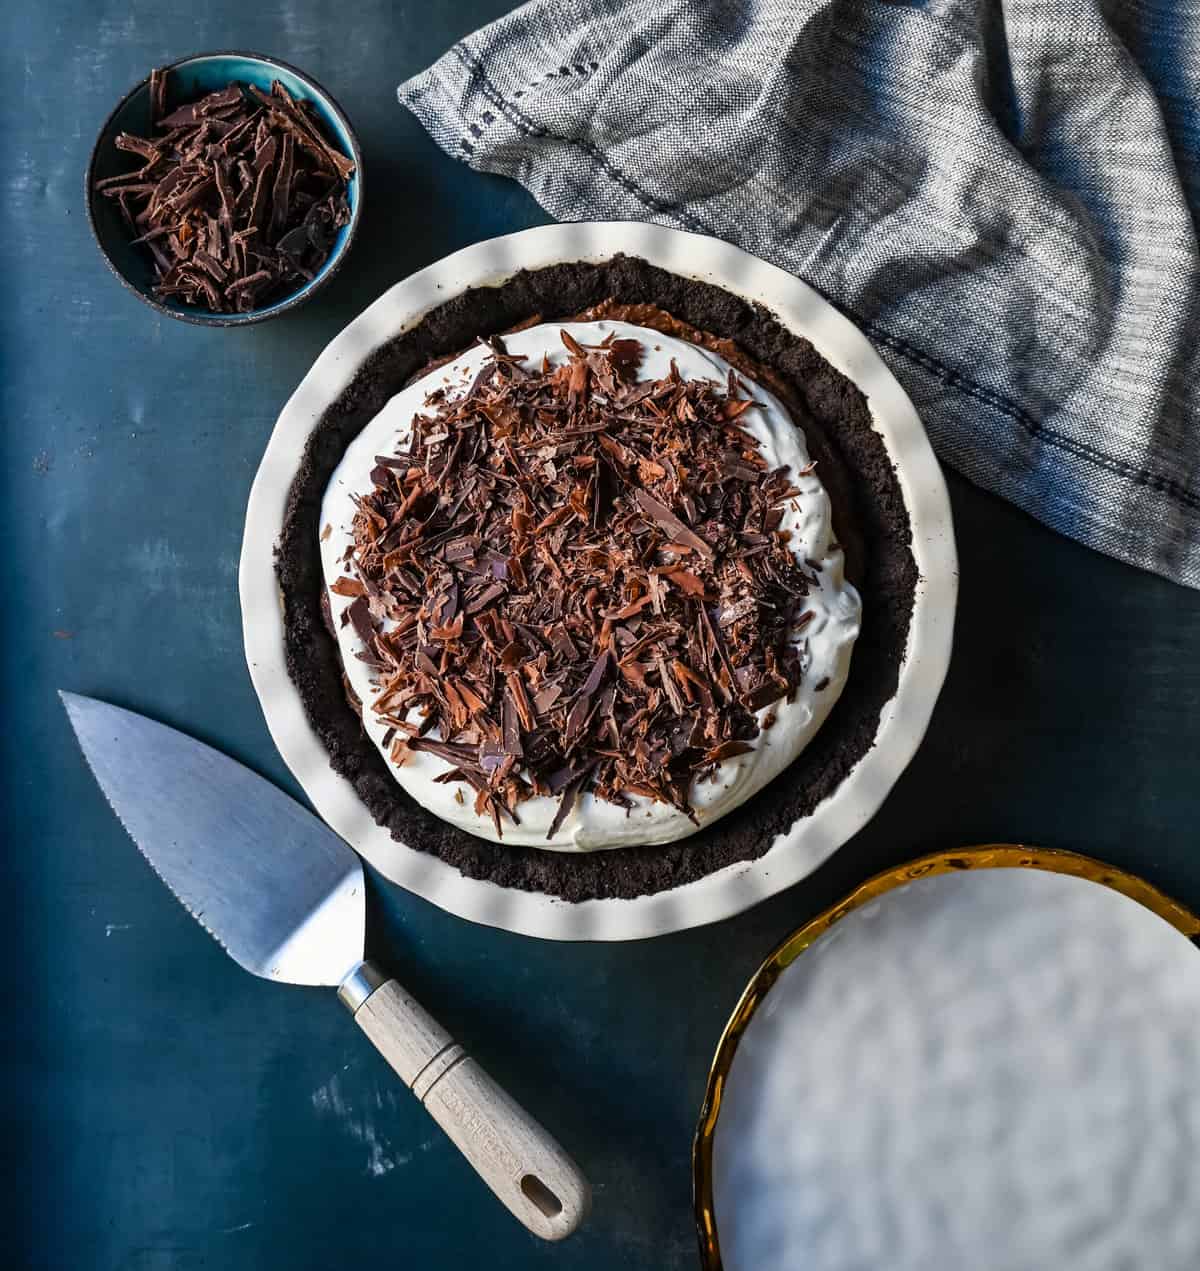 Chocolate Pie with Oreo cookie crust.